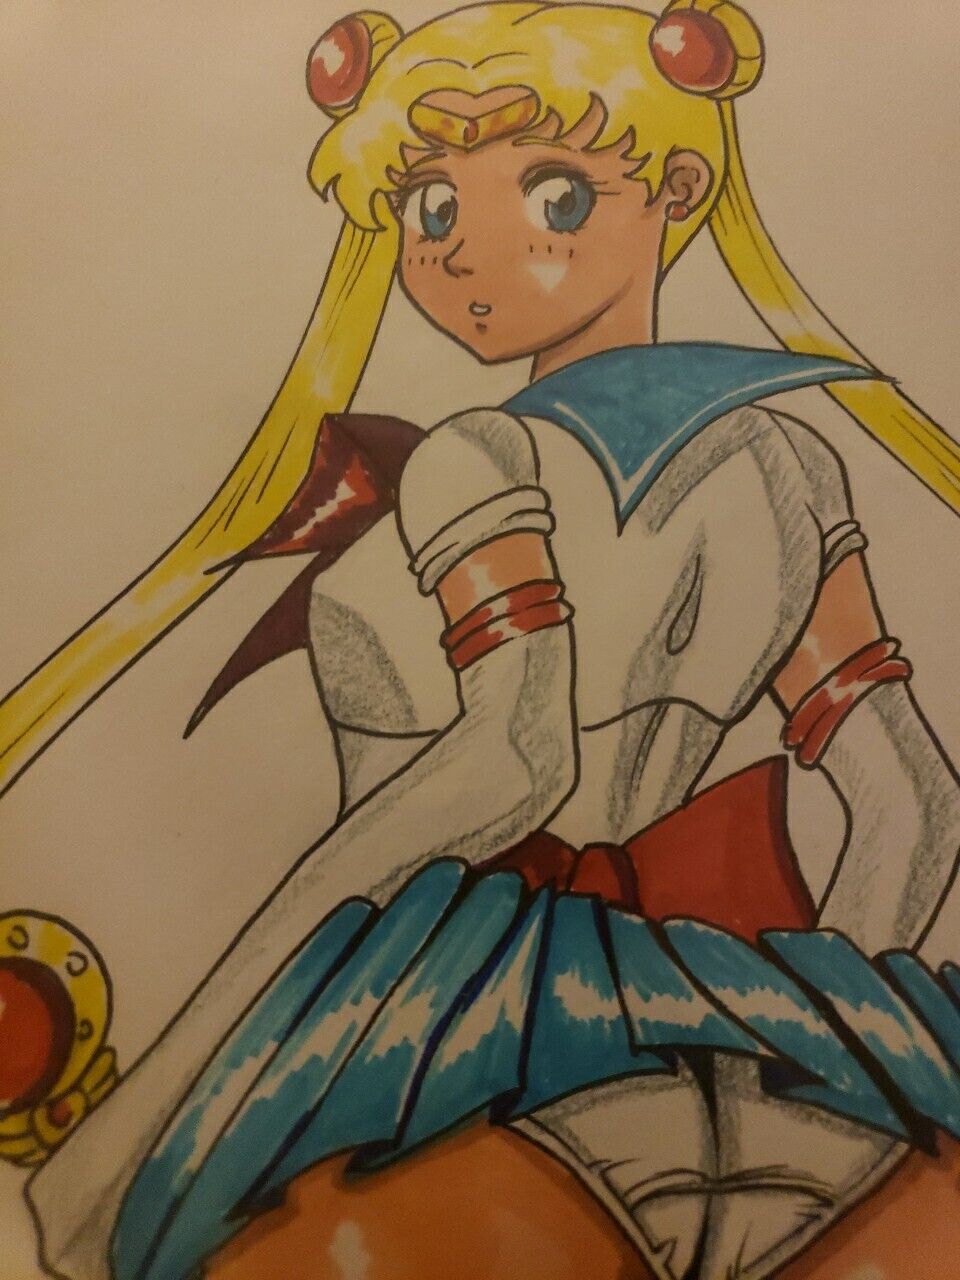 Sailor Moon Original Art